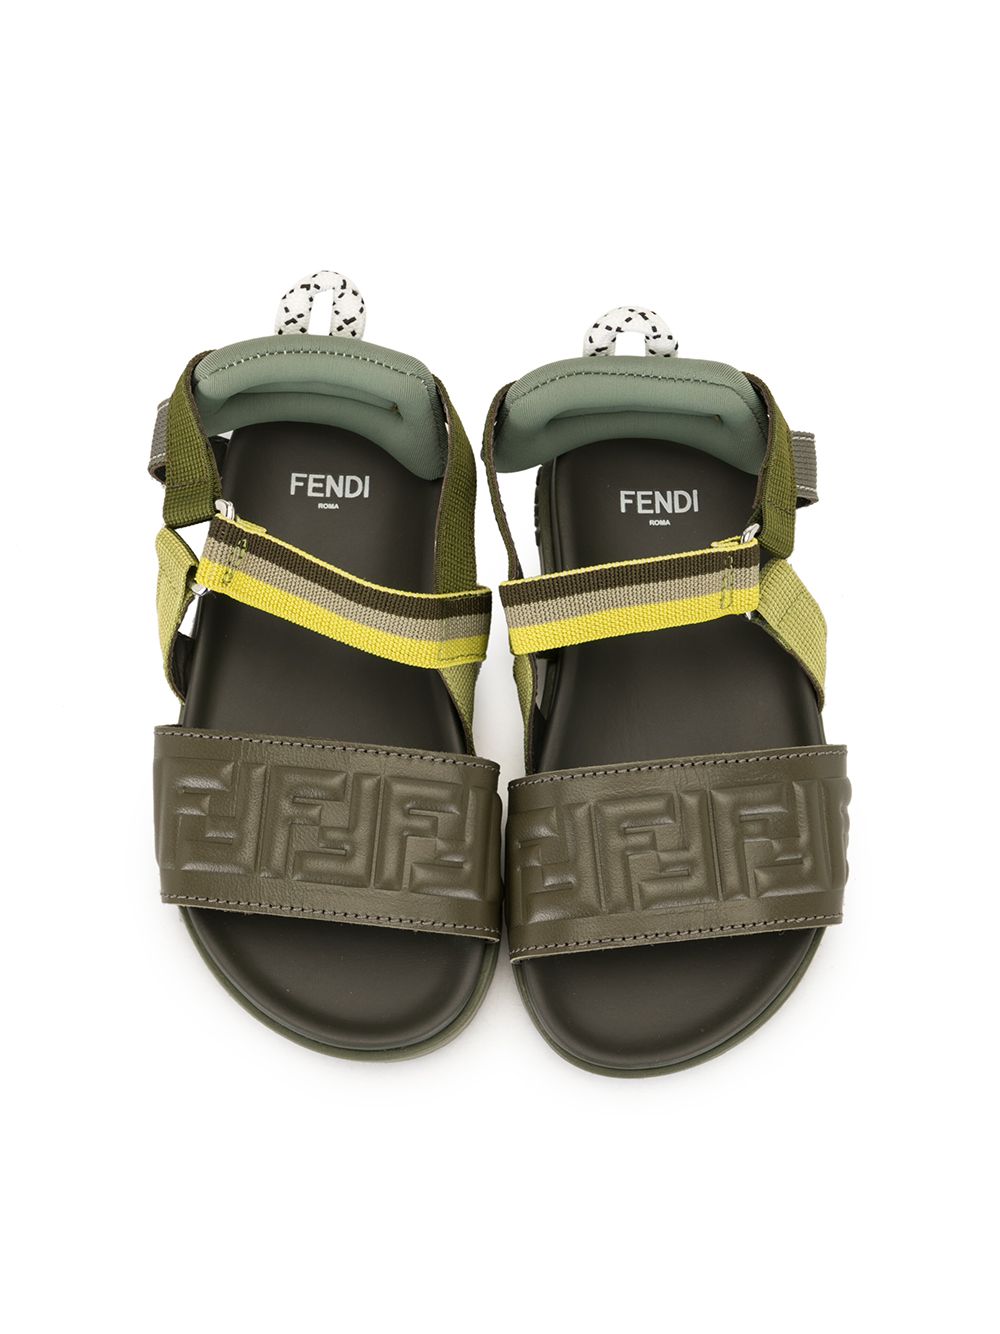 фото Fendi kids сандалии с открытым носком и логотипом